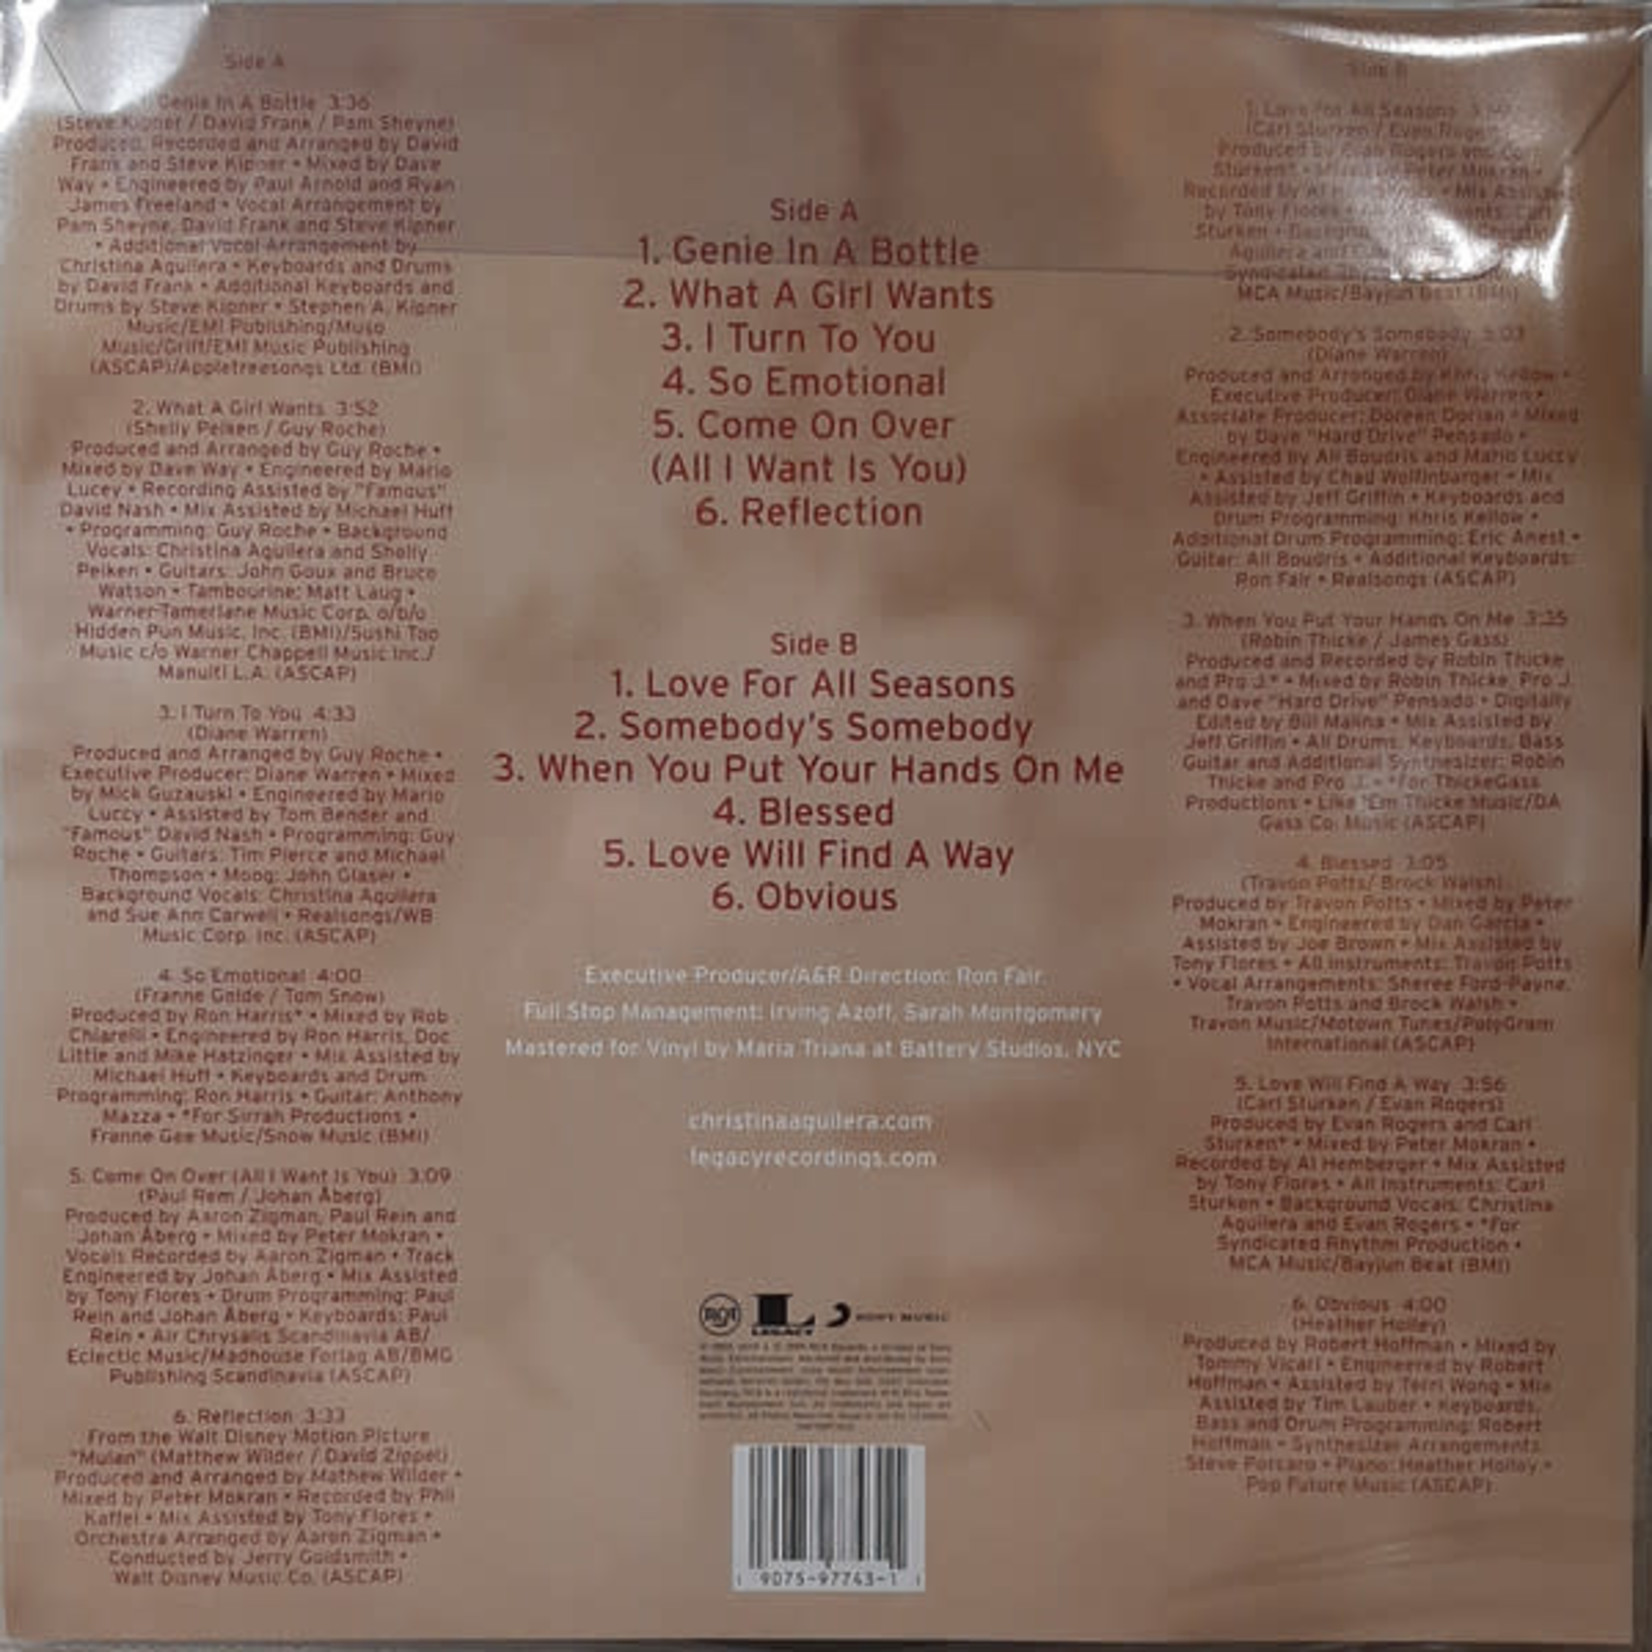 Legacy Christina Aguilera - Christina Aguilera (LP) [Pic]